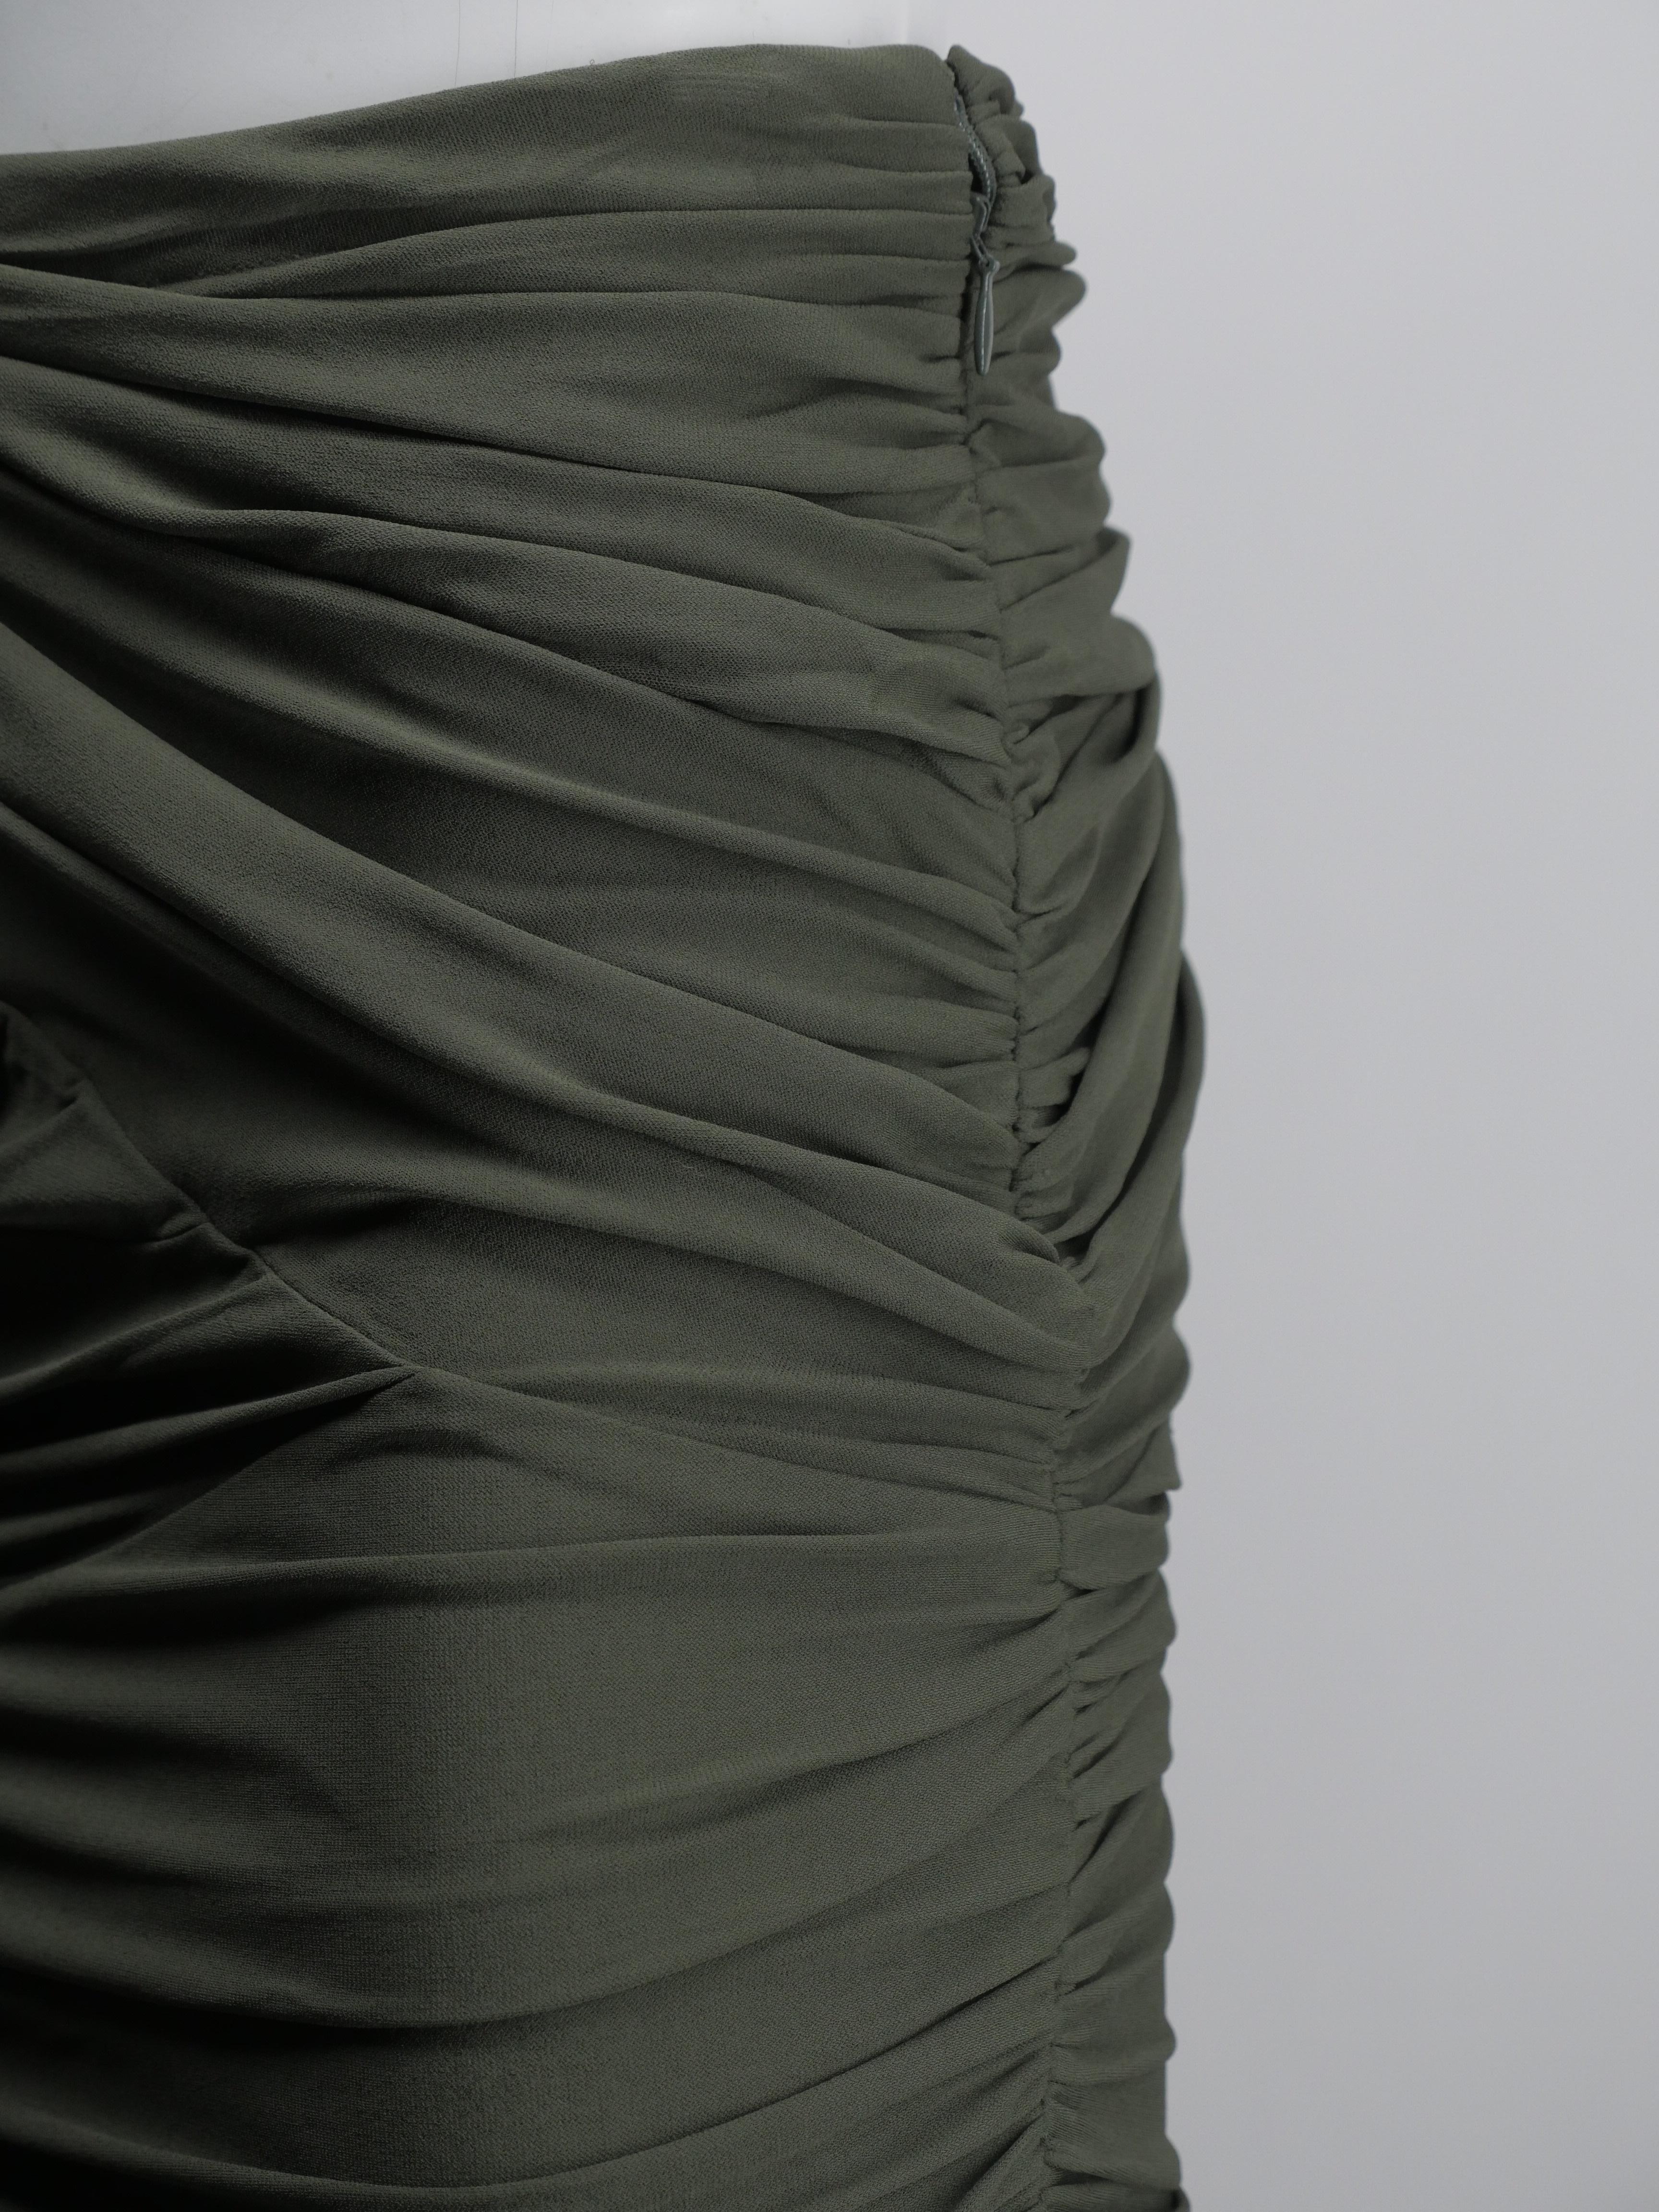 Ralph Lauren Black Label Size 6 Olive Green Ruched Skirt 2